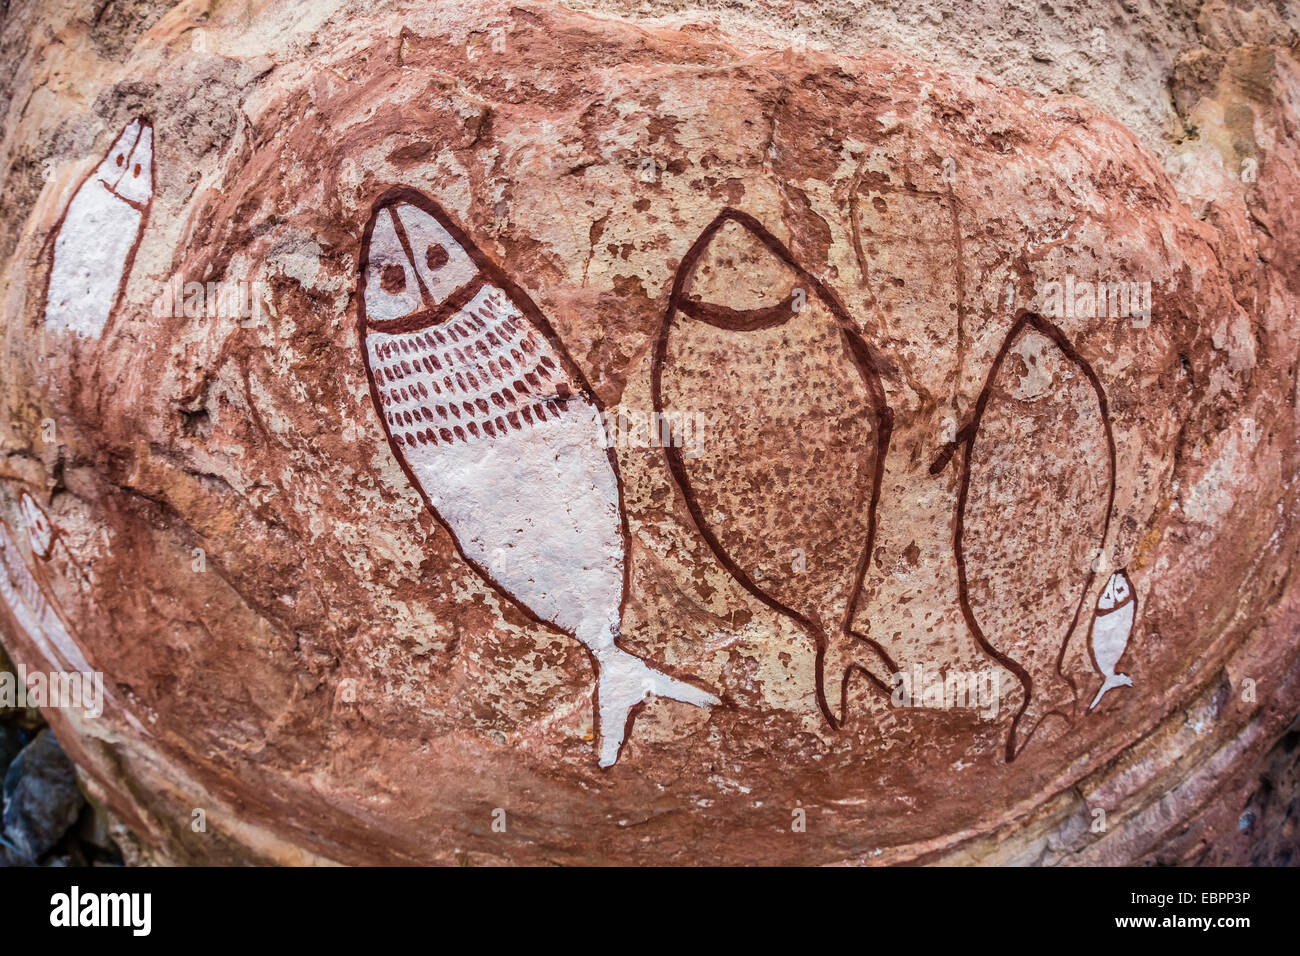 Aborigeni grotta Wandjina artwork in Grotte di arenaria a punto raft, Kimberley, Australia occidentale, Australia Pacific Foto Stock